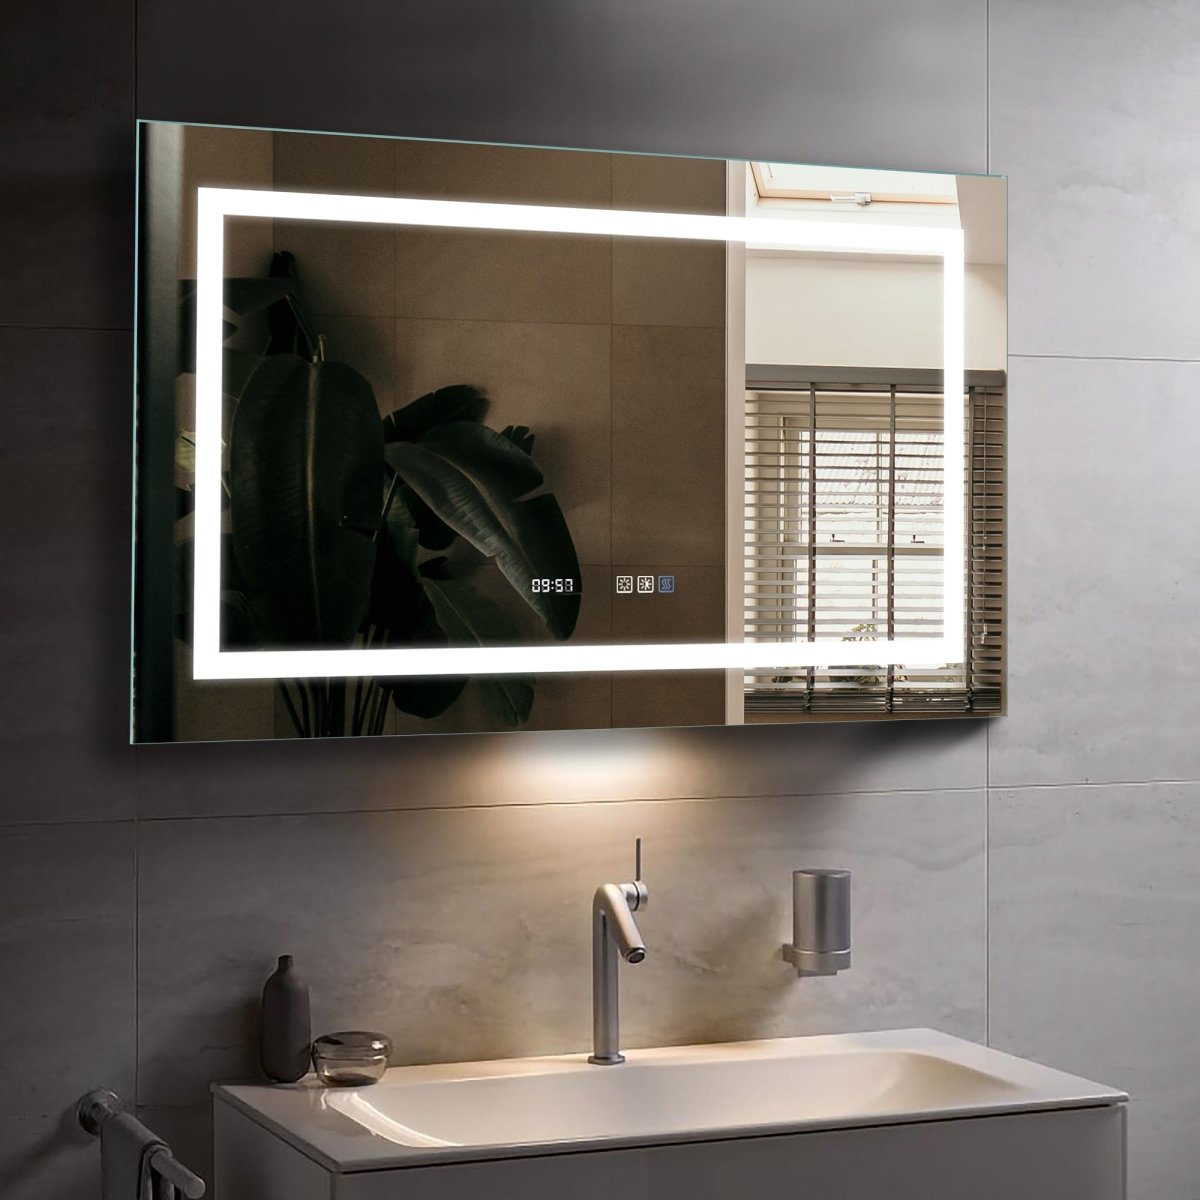 ExBrite 40" W x 24" H Bathroom Led Light Mirror Anti Fog with Digital Clock Lighted Vanity Mirror - ExBriteUSA